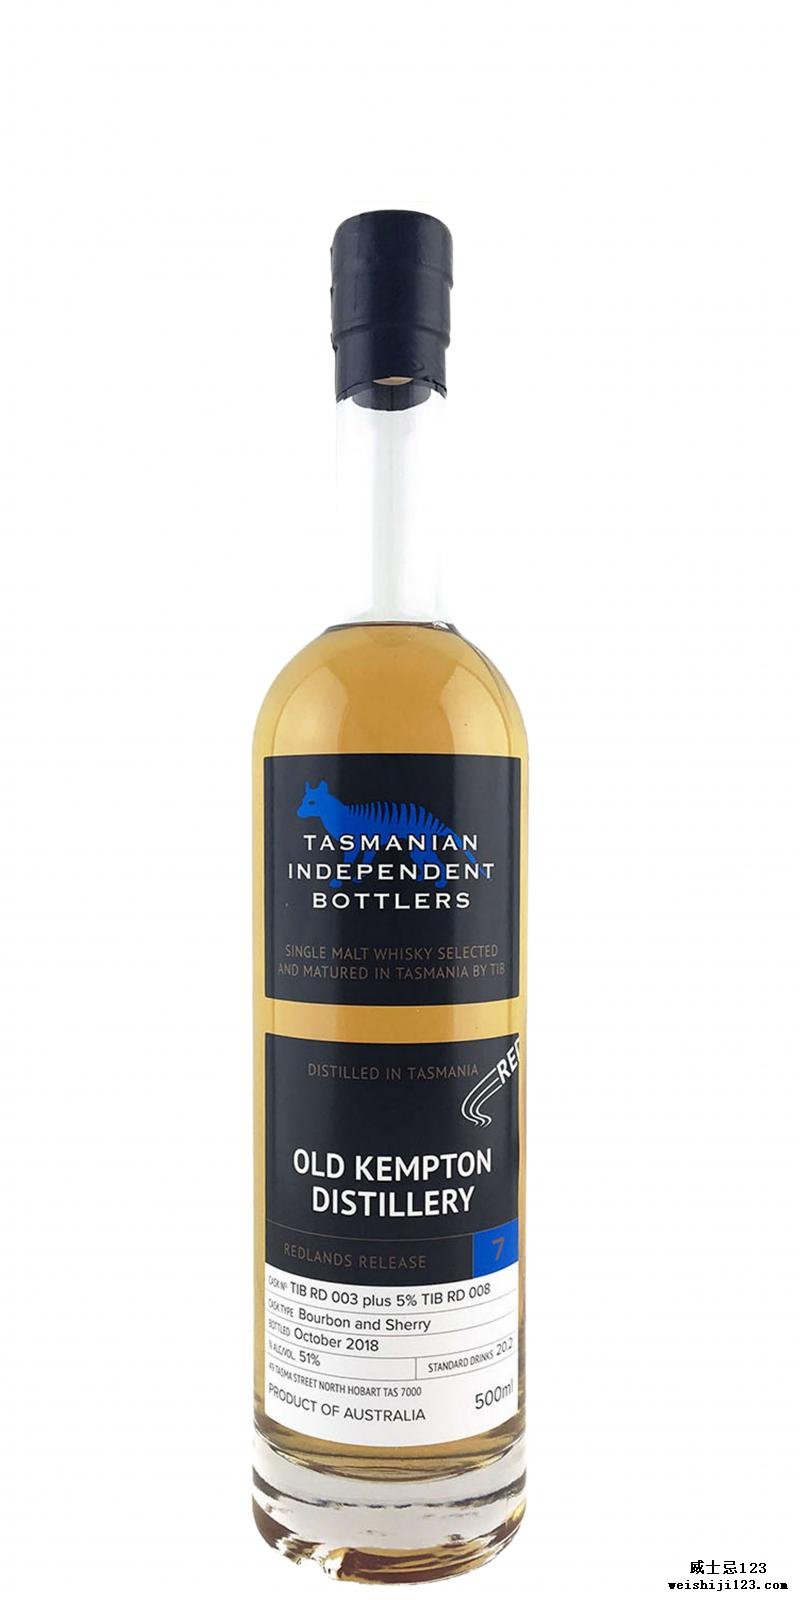 Old Kempton Redlands Release 7 TmIB